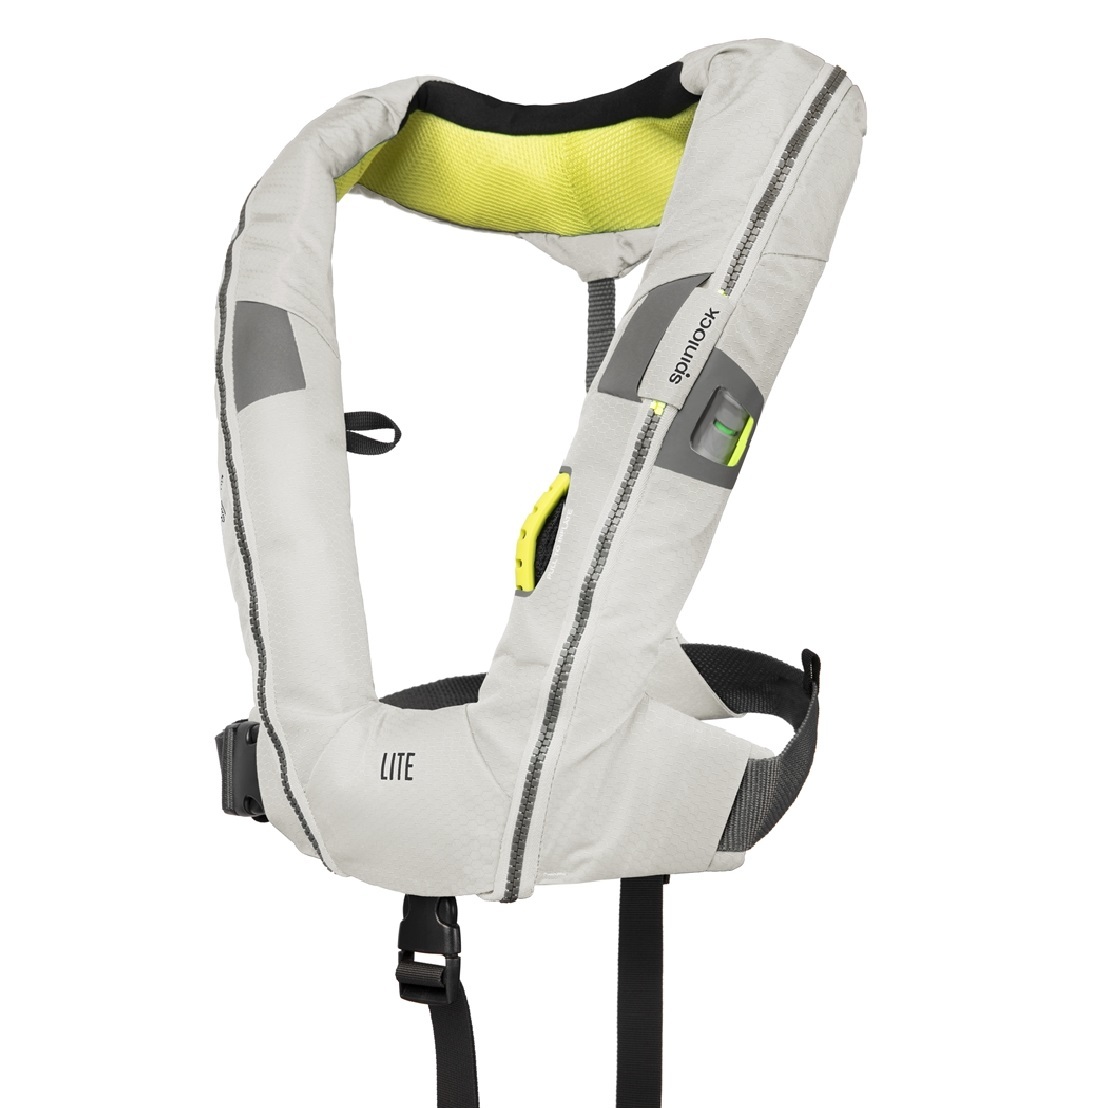 Deckvest Lite & Lite+ inflatable lifejacket